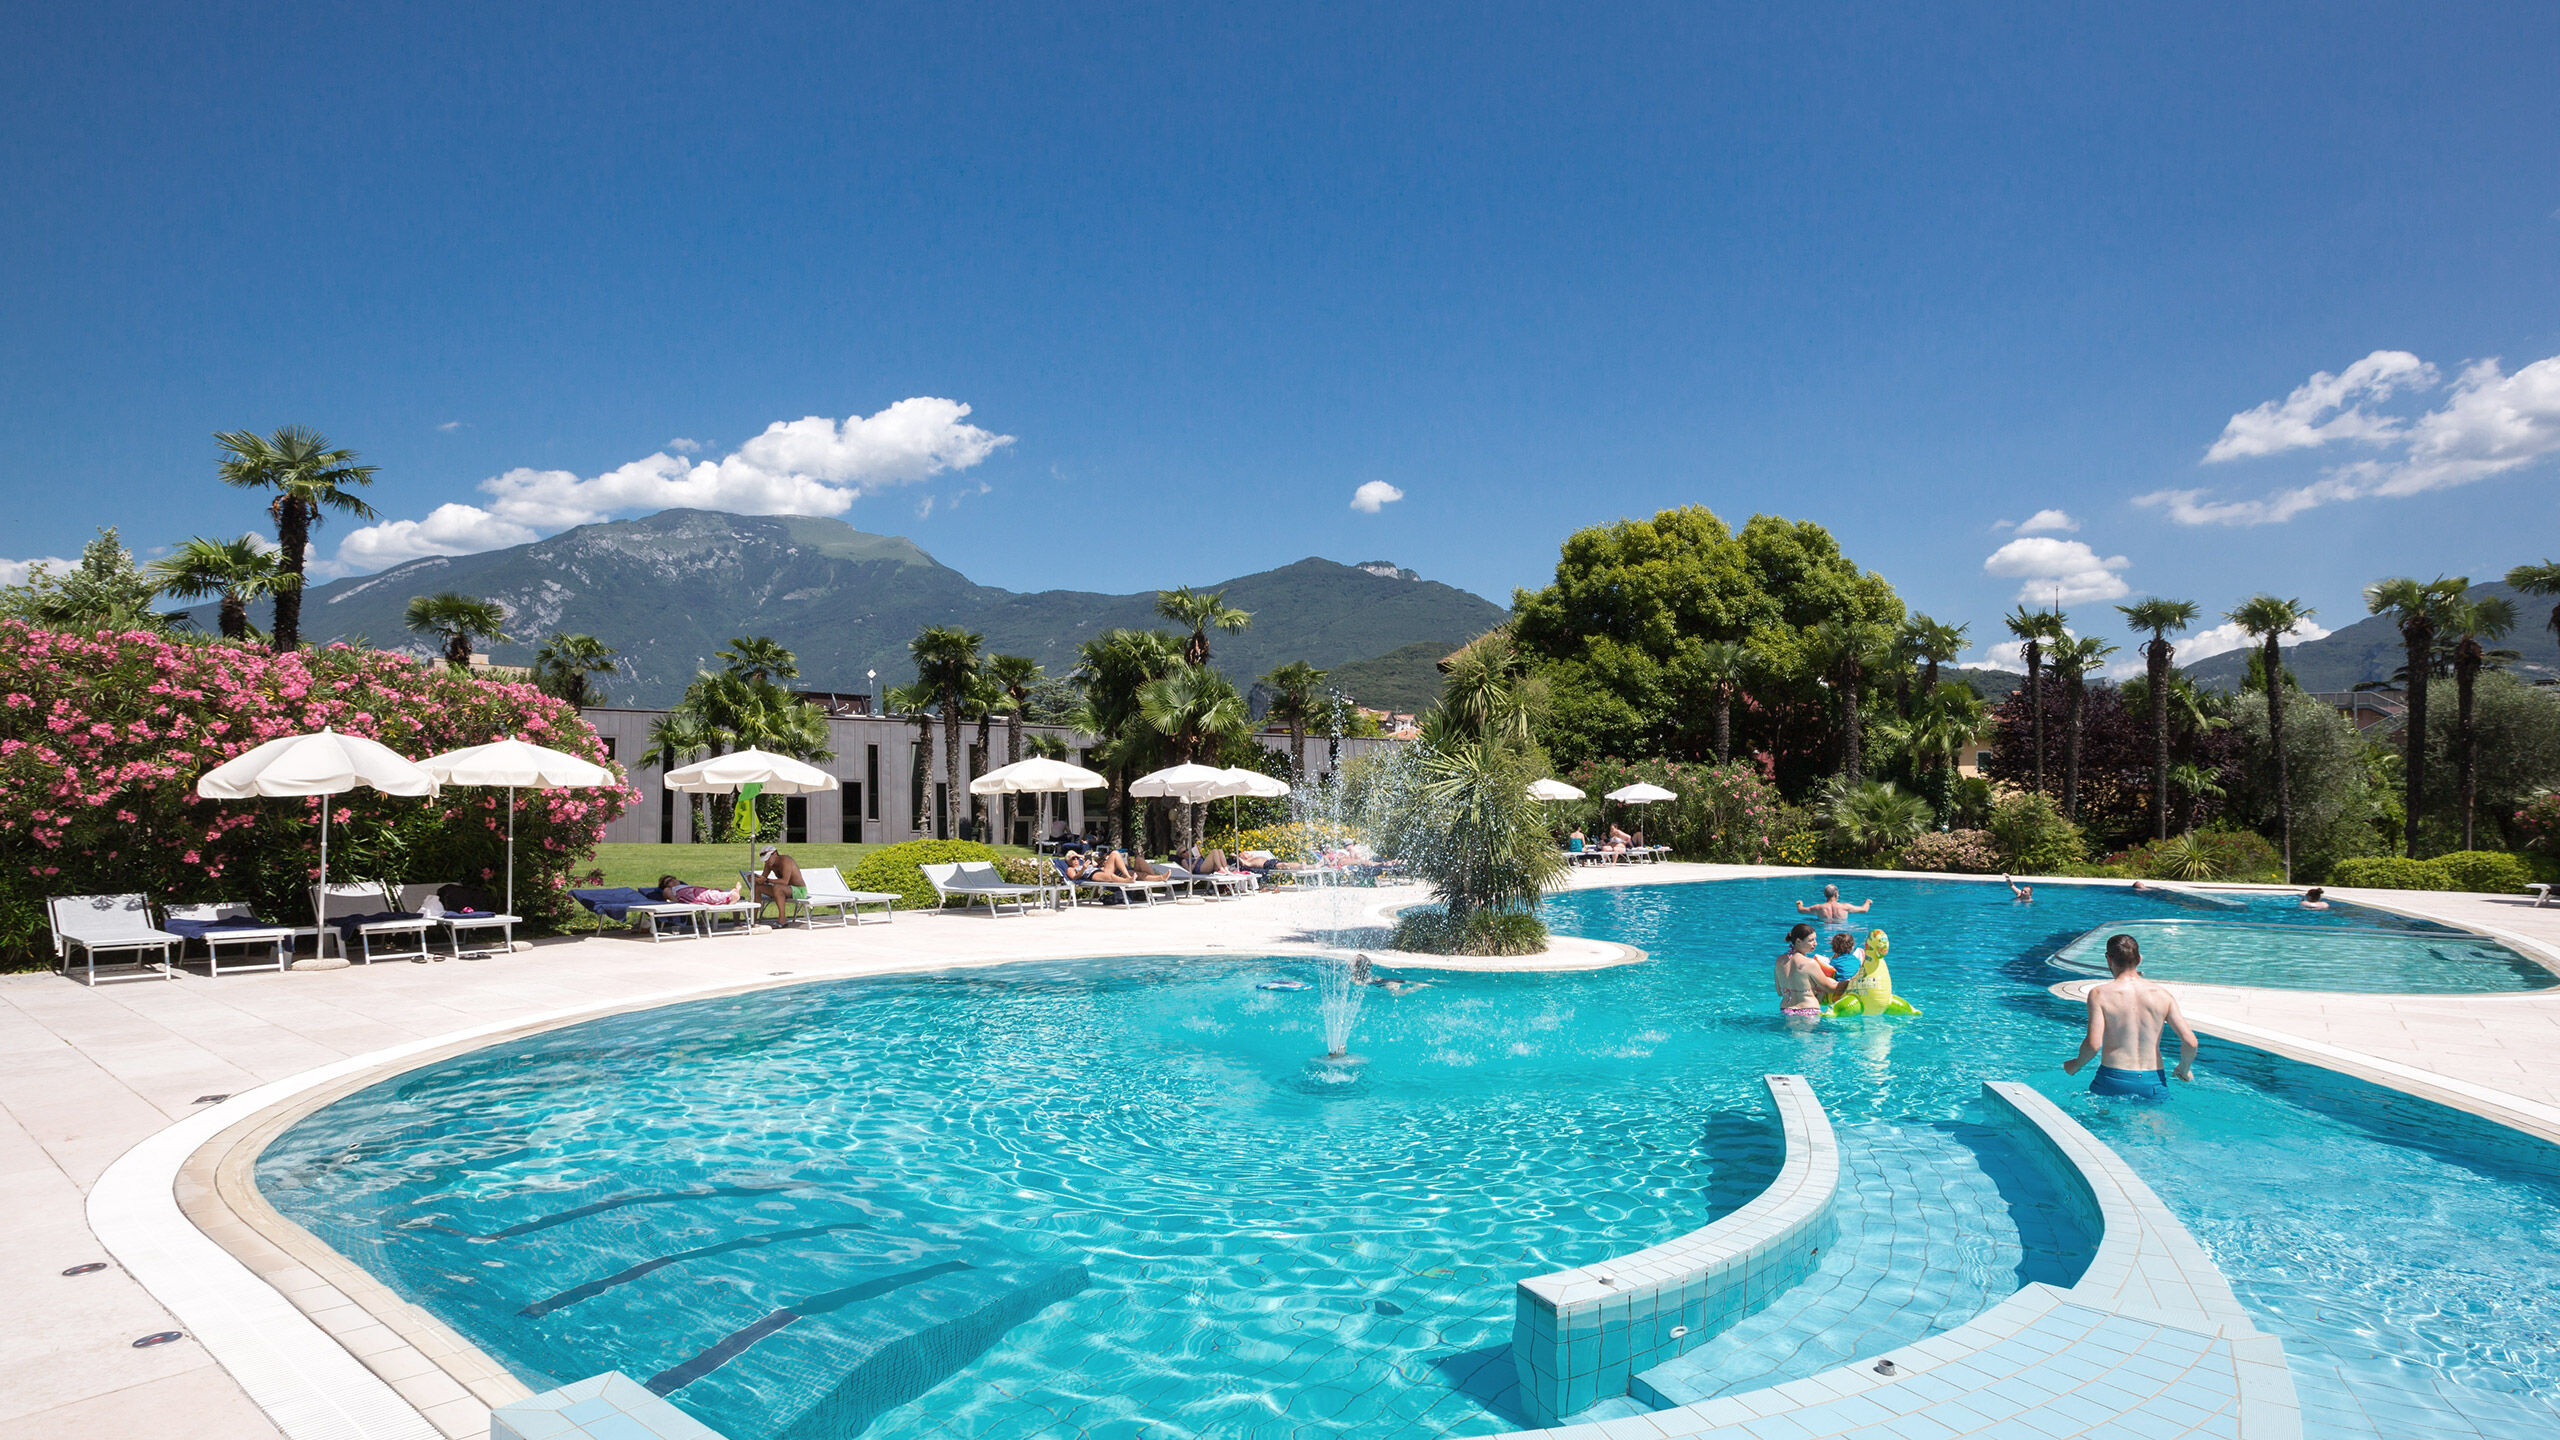 4 Star Hotel Riva del Garda - Astoria Resort Park Hotel - Lake Garda Trentino Dolomites Astoria Resort | Families